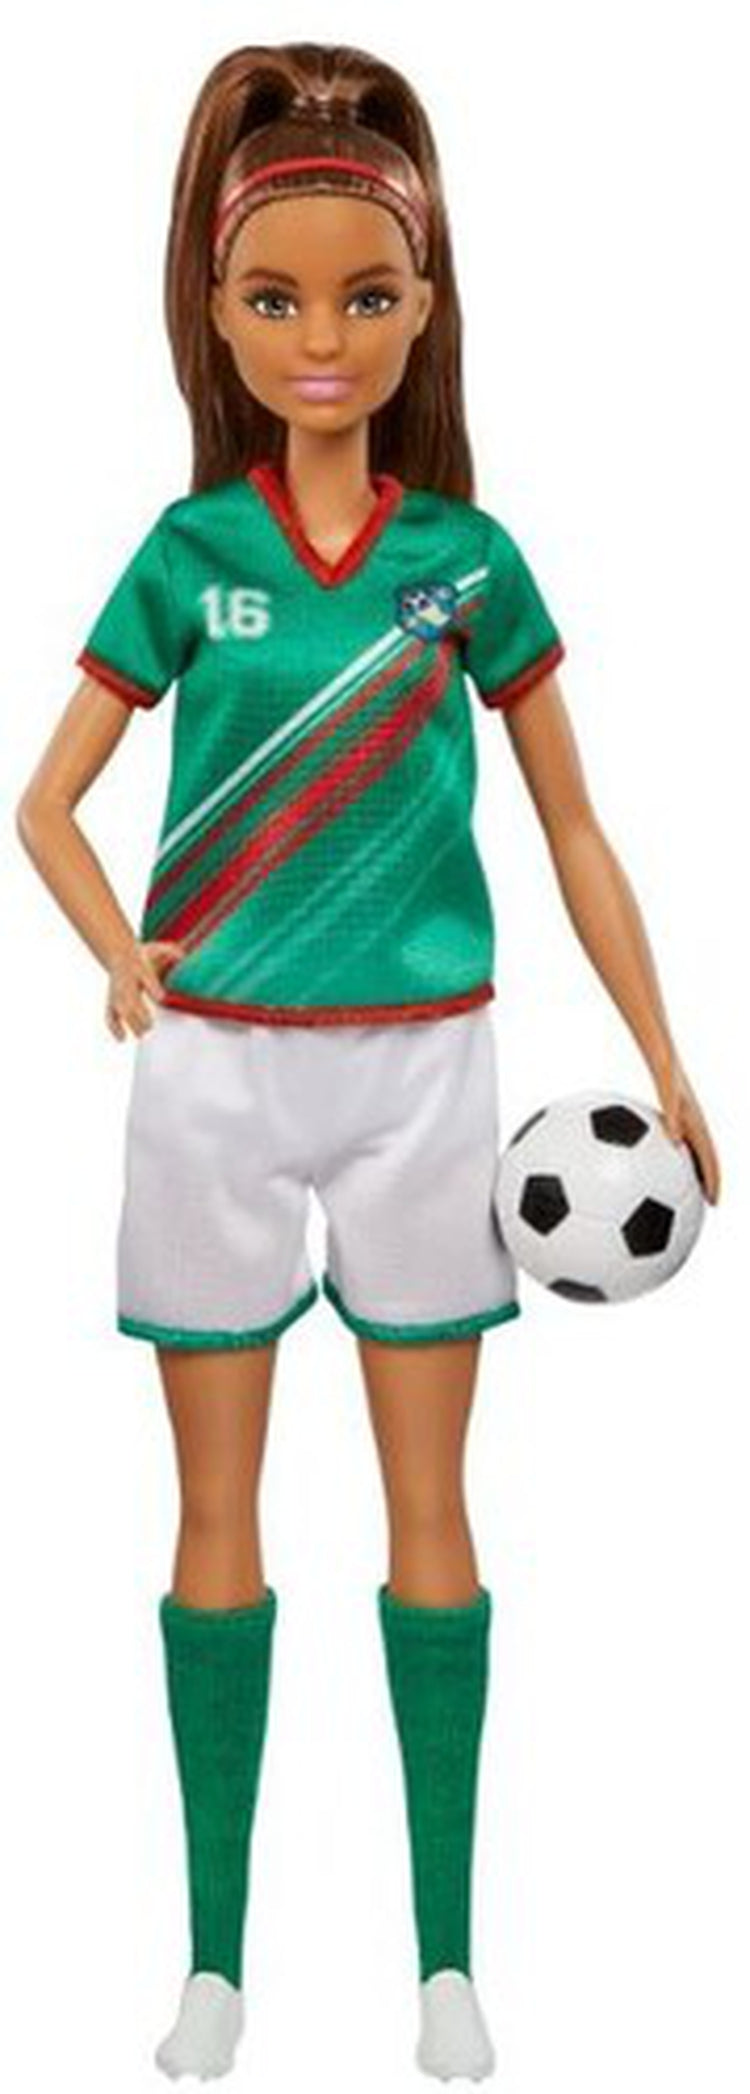 Mattel - Barbie I Can Be Soccer Player, Brunette, Green & Red Uniform